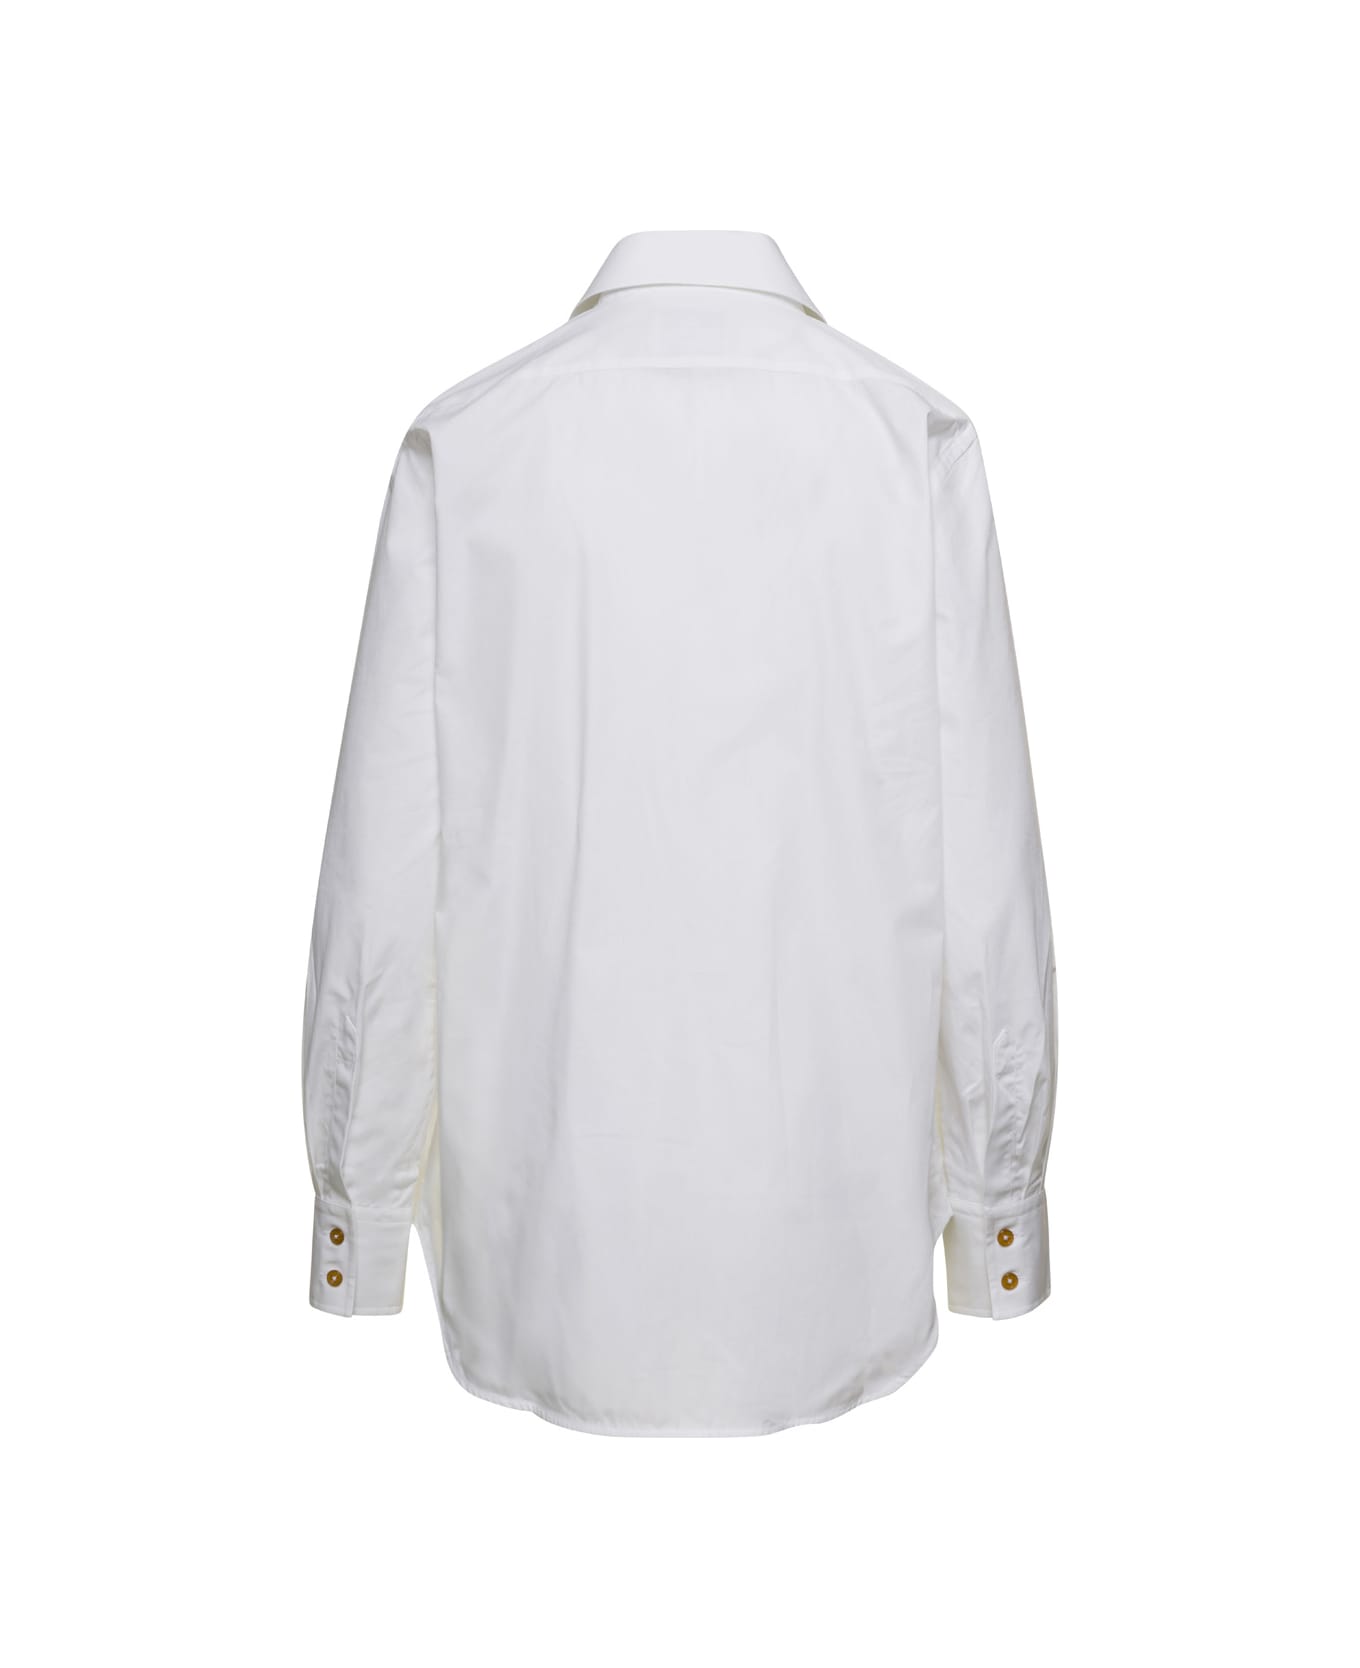 Vivienne Westwood Shirt - White